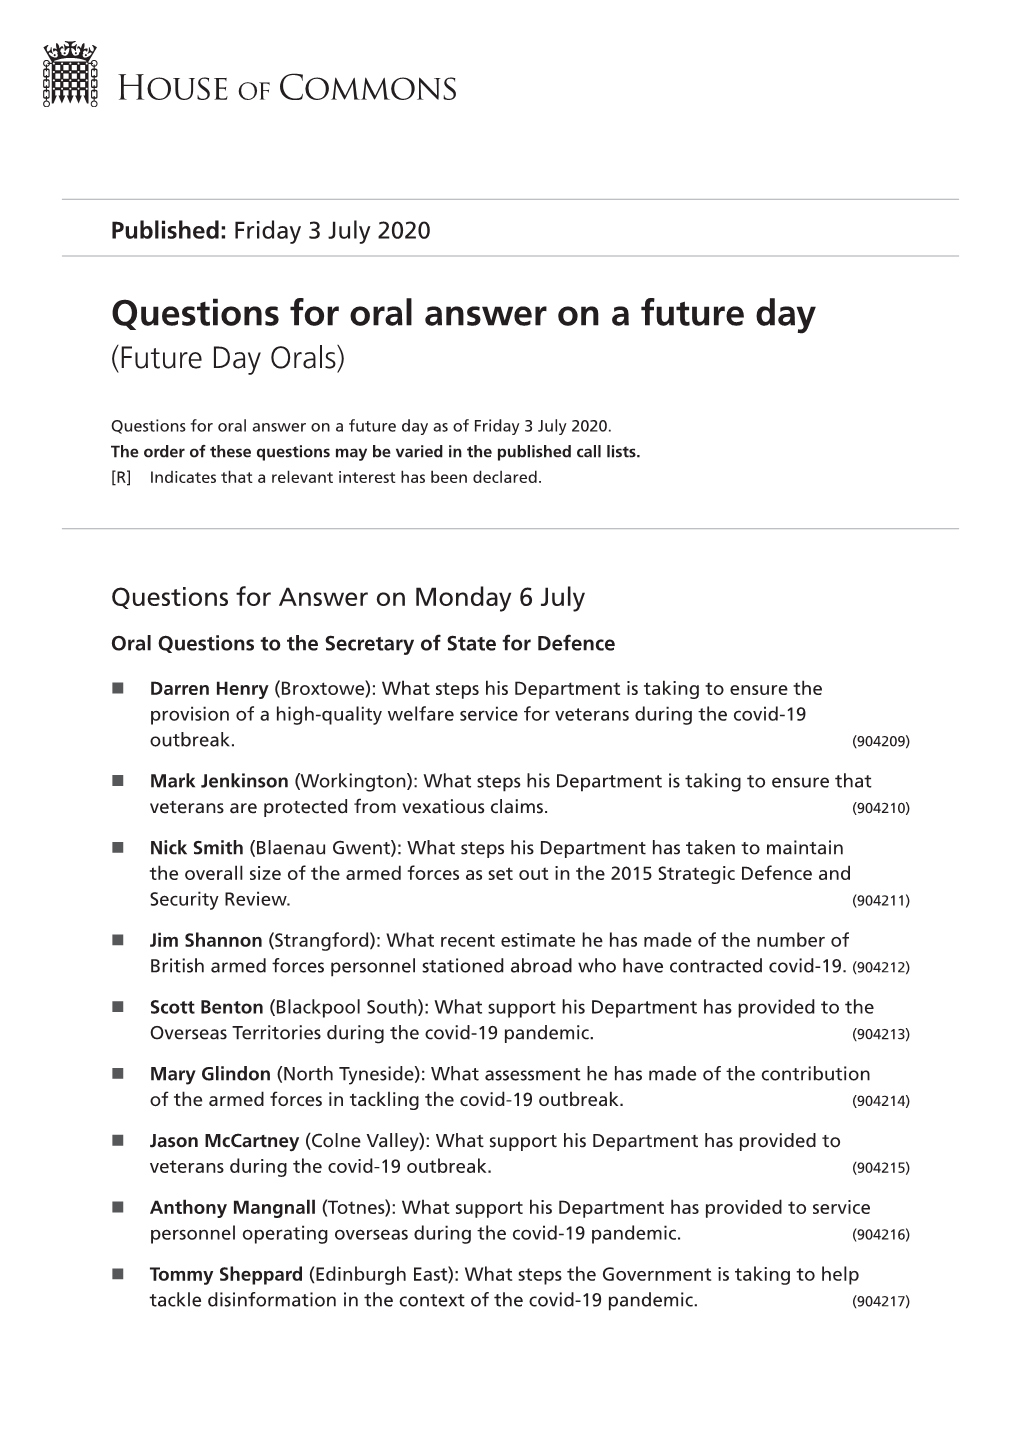 Future Oral Questions As of Fri 3 Jul 2020